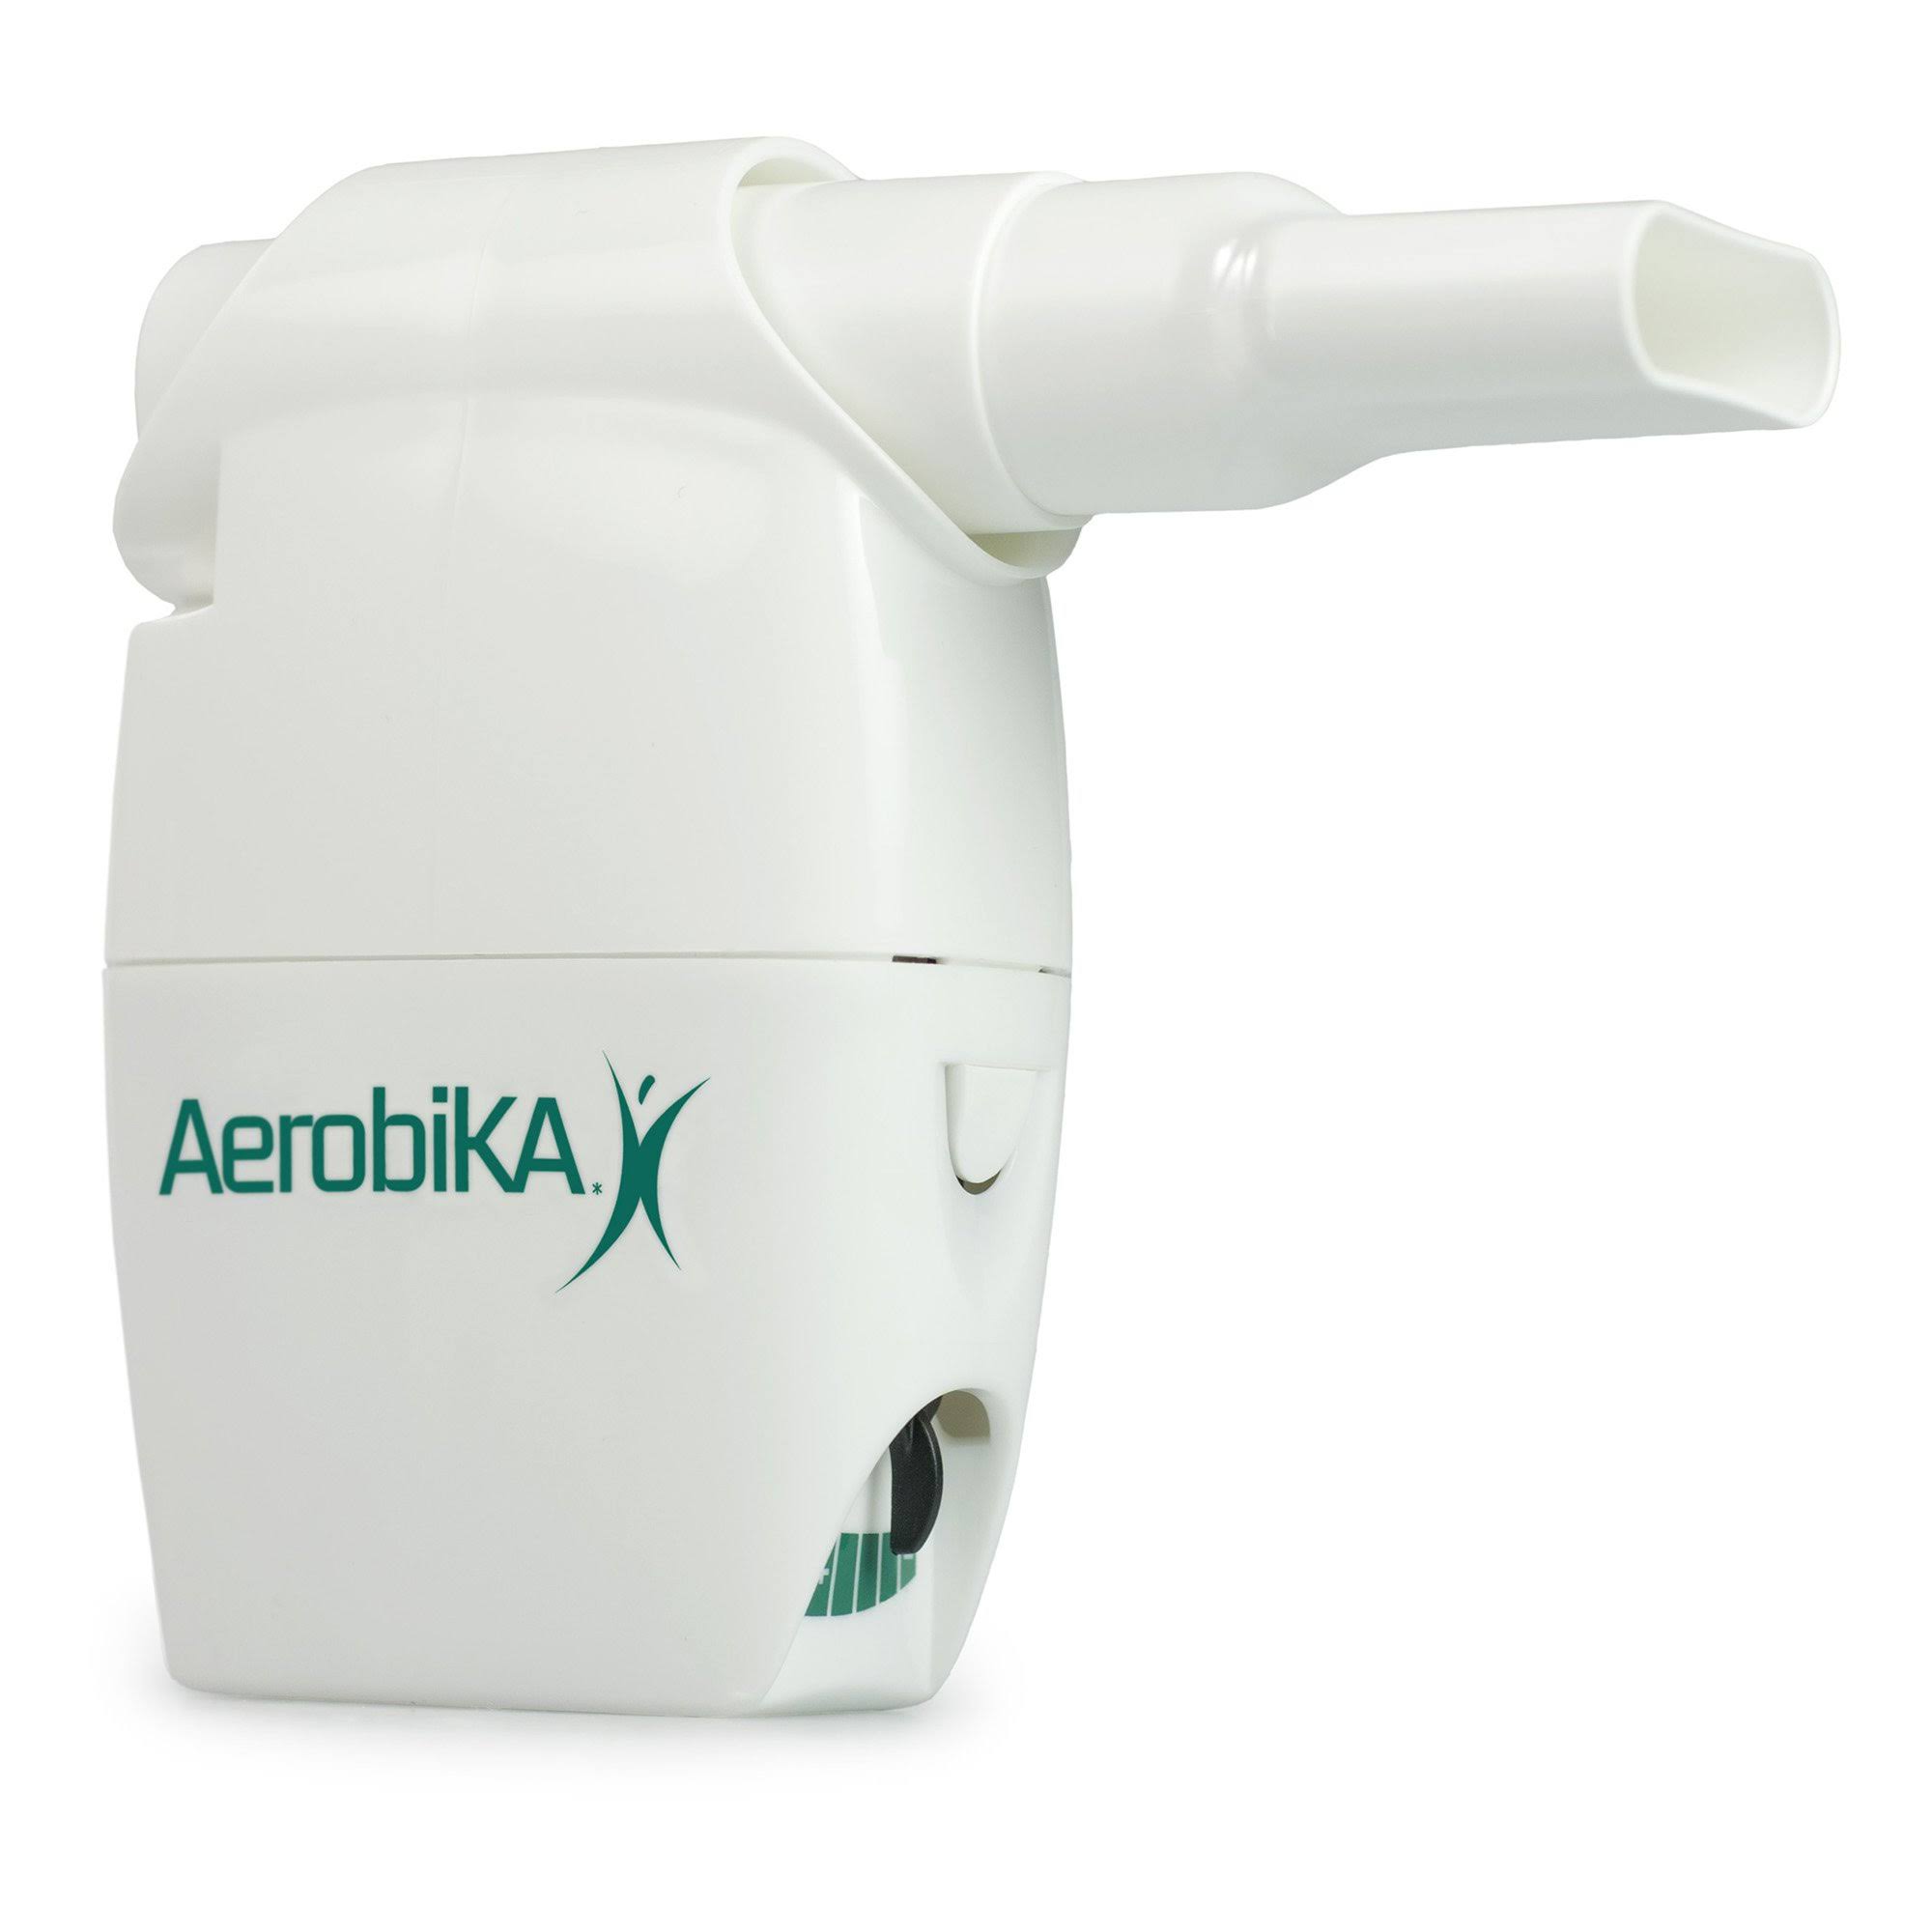 Aerobika Oscillating Positive Expiratory Pressure Therapy System